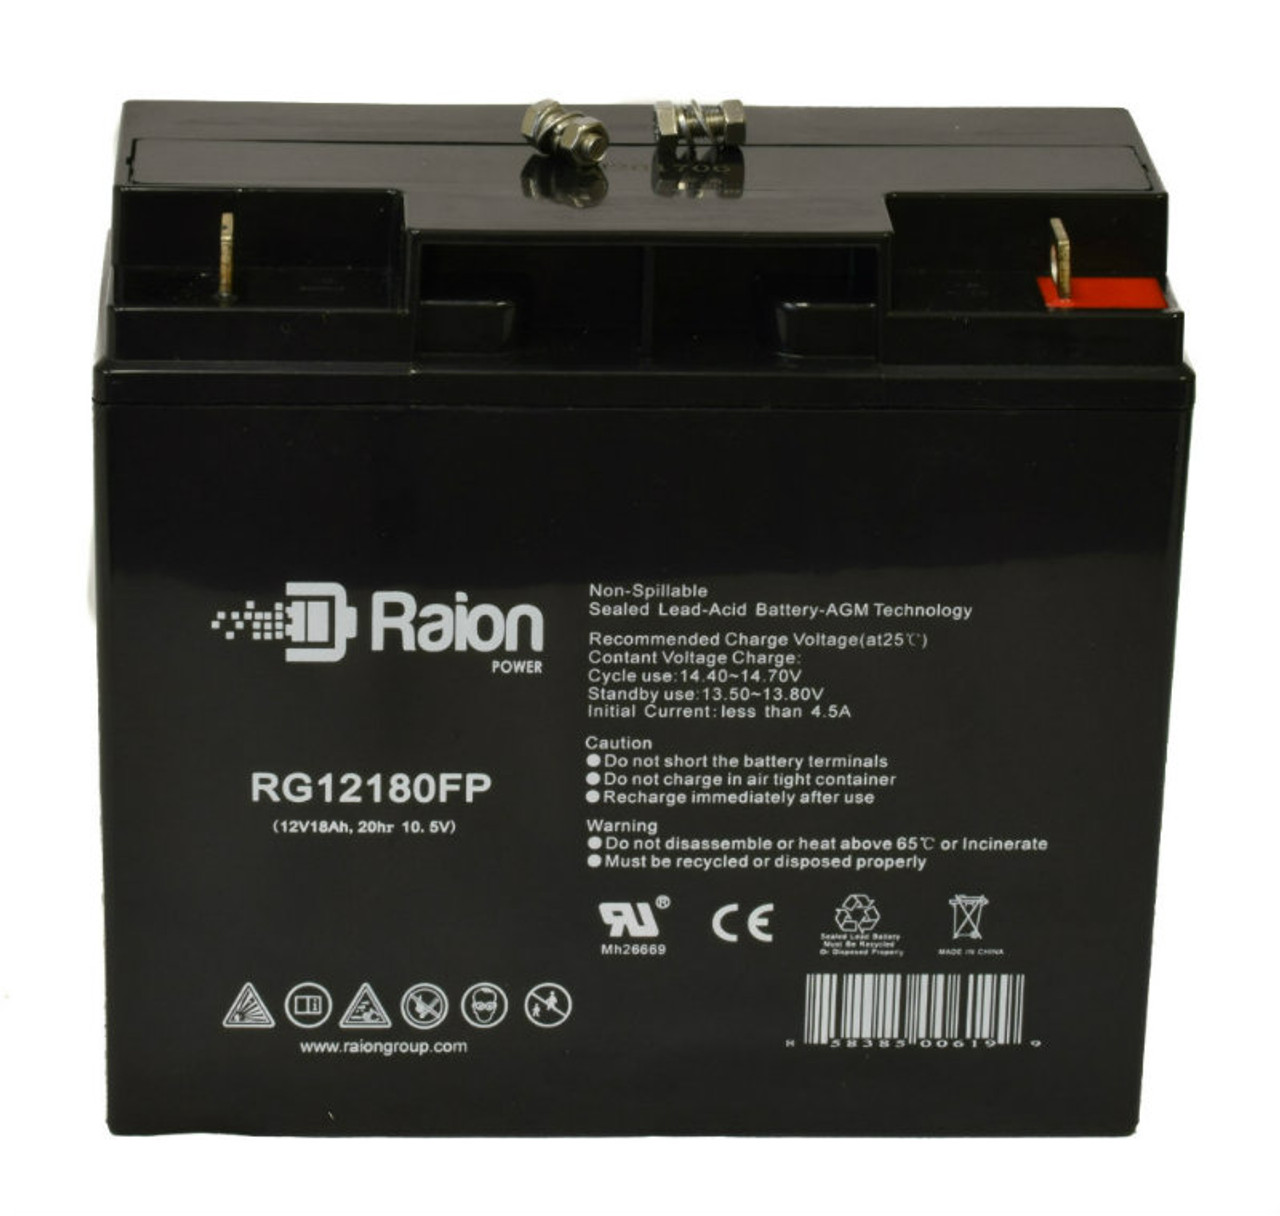 Raion Power RG12180FP 12V 18Ah Lead Acid Battery for FIAMM FG21703